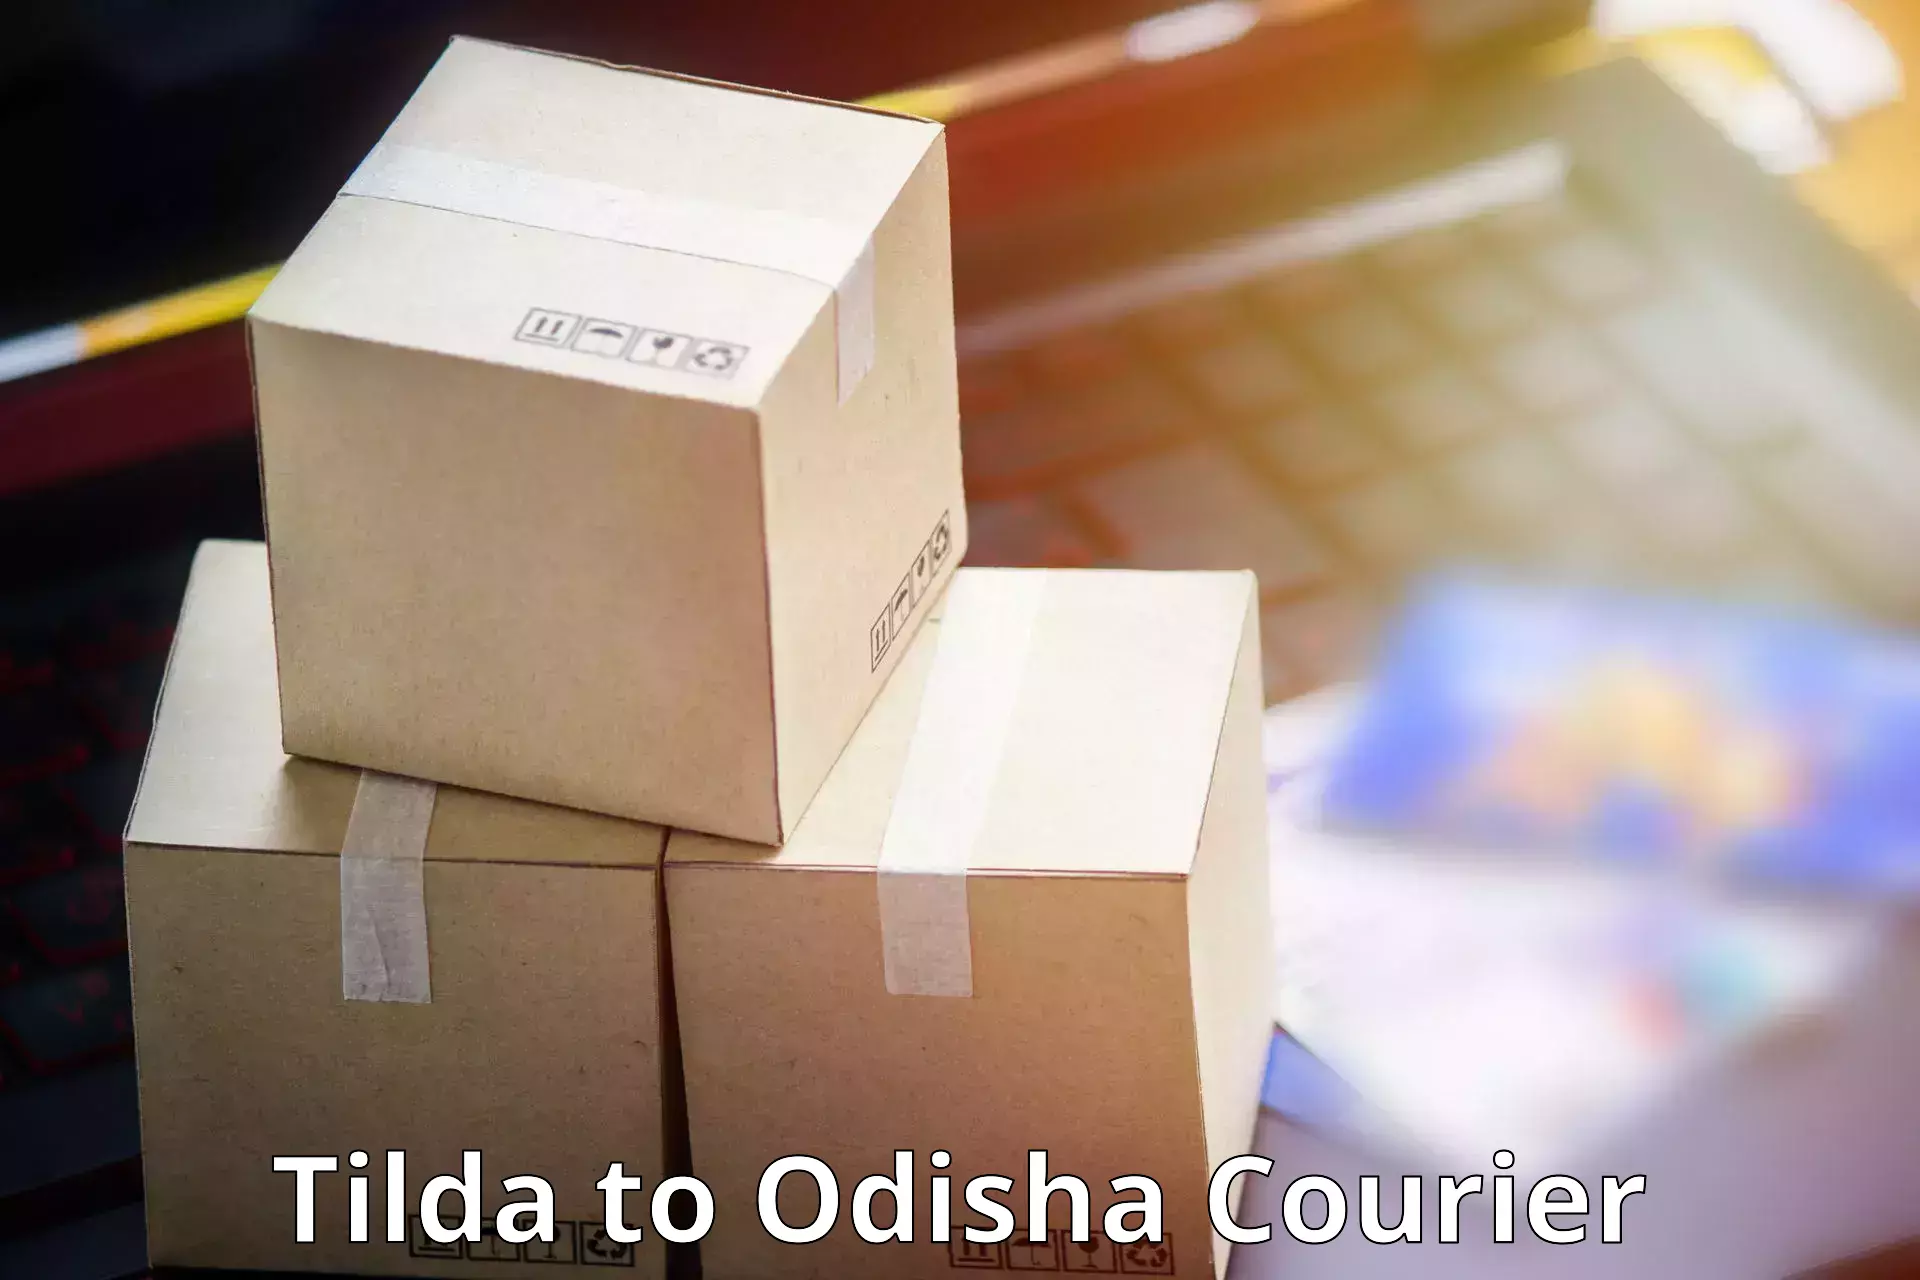 Express mail service Tilda to Odisha